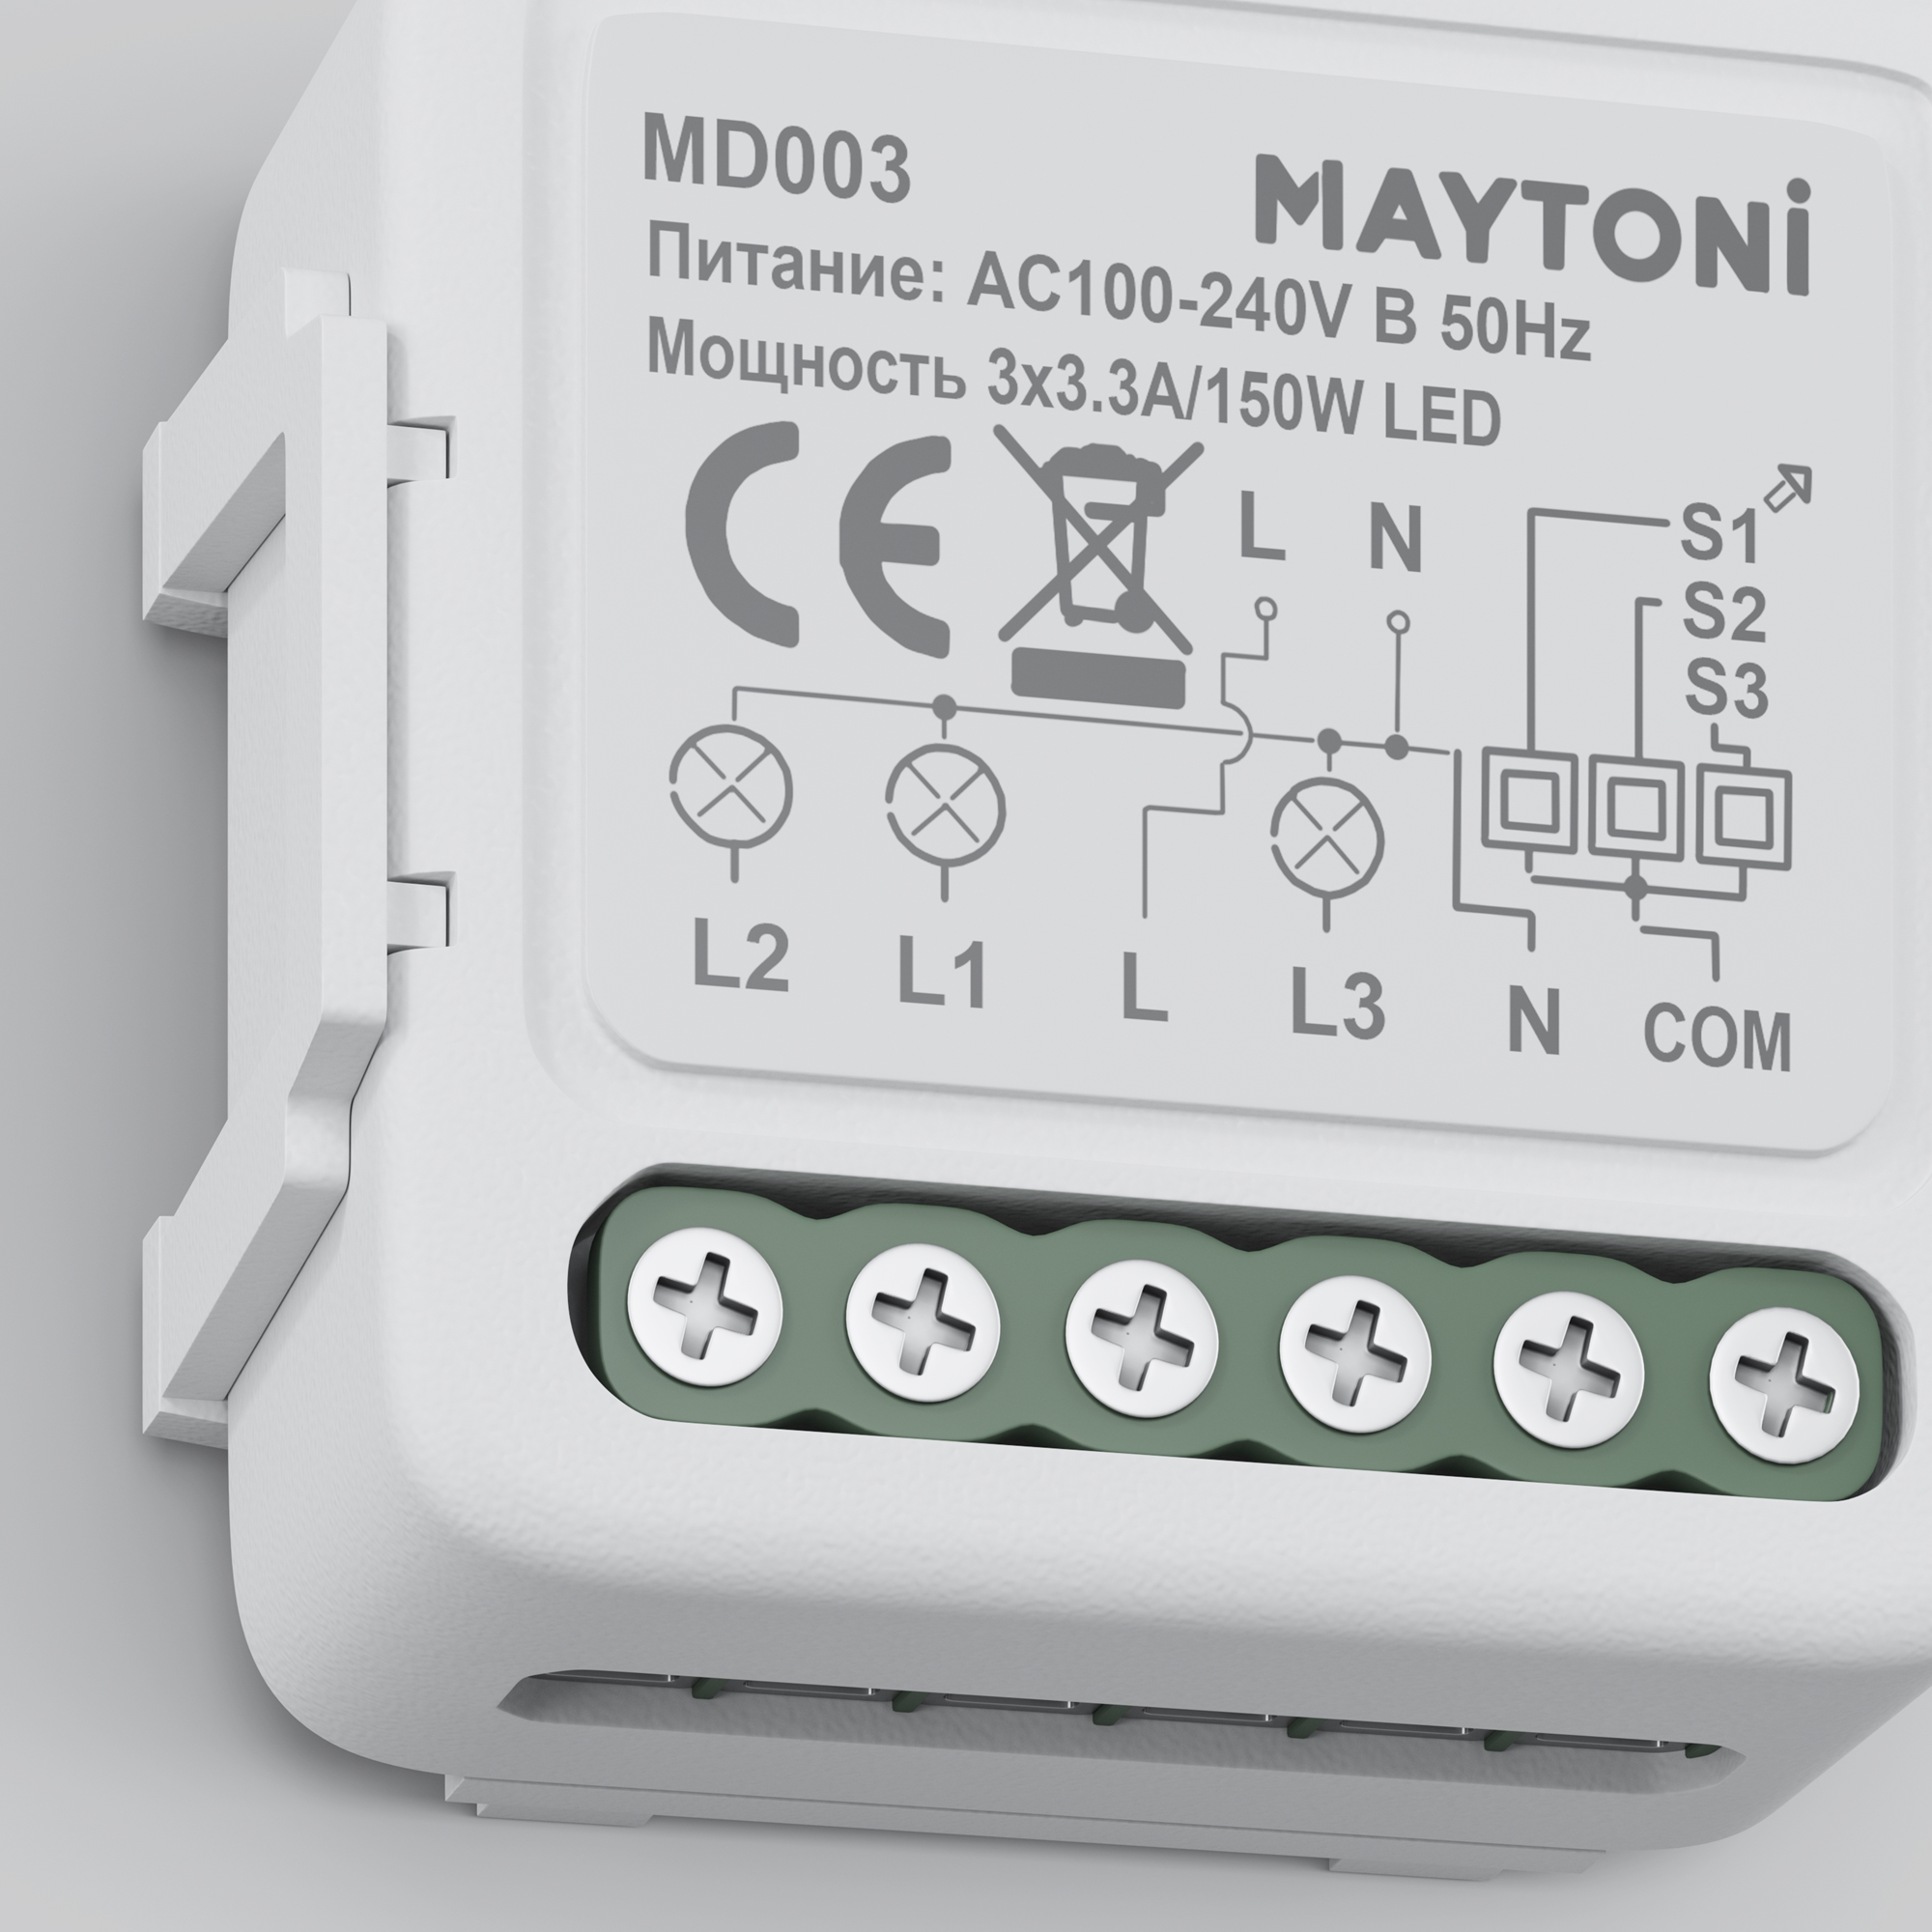 Реле Wi-Fi Maytoni MD003, цвет белый - фото 2